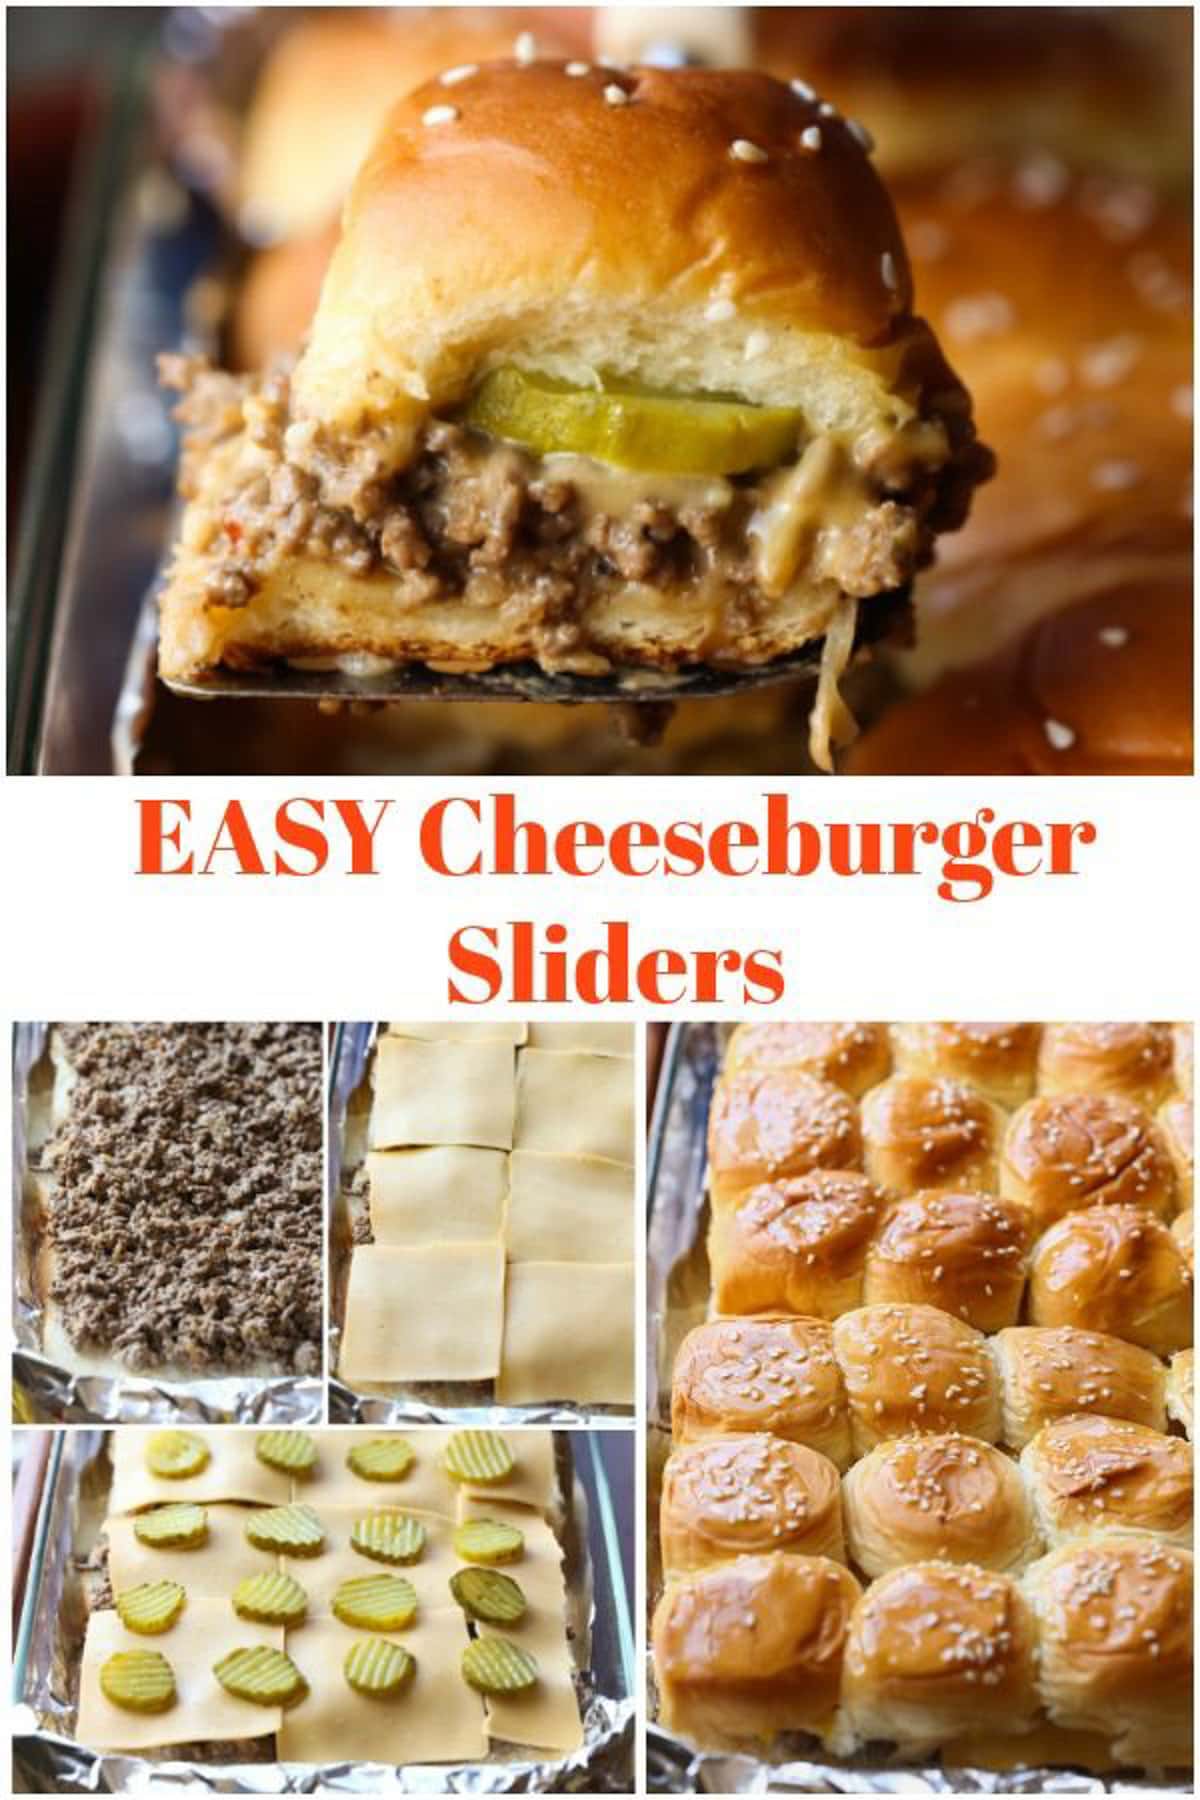 Cheeseburger Sliders Pinterest collage.